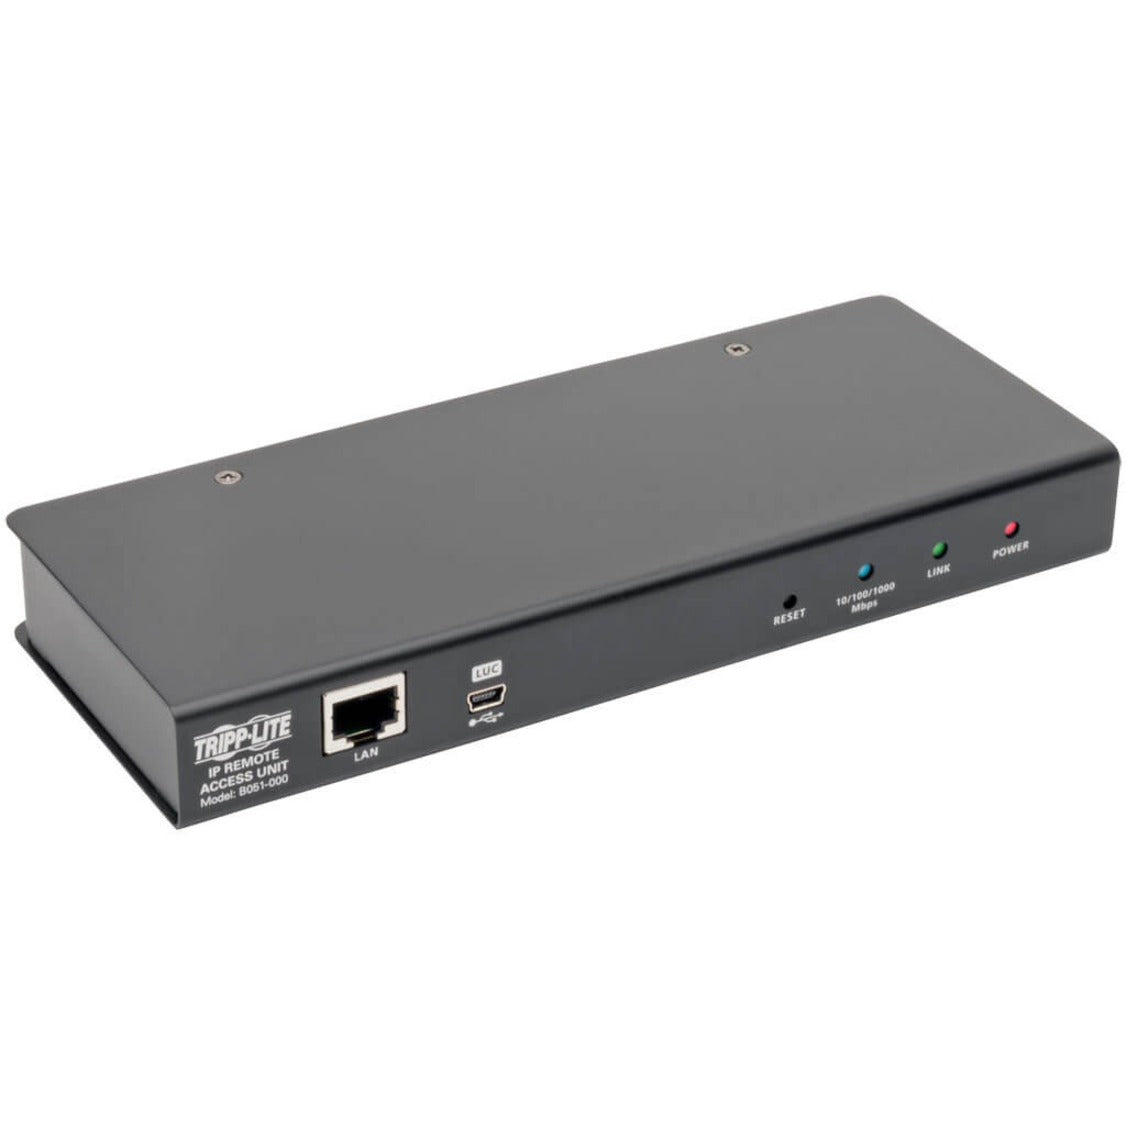 Tripp Lite B051-000 IP Remote Access KVM Switch, USB/Serial Port, 3 Year Warranty, TAA Compliant